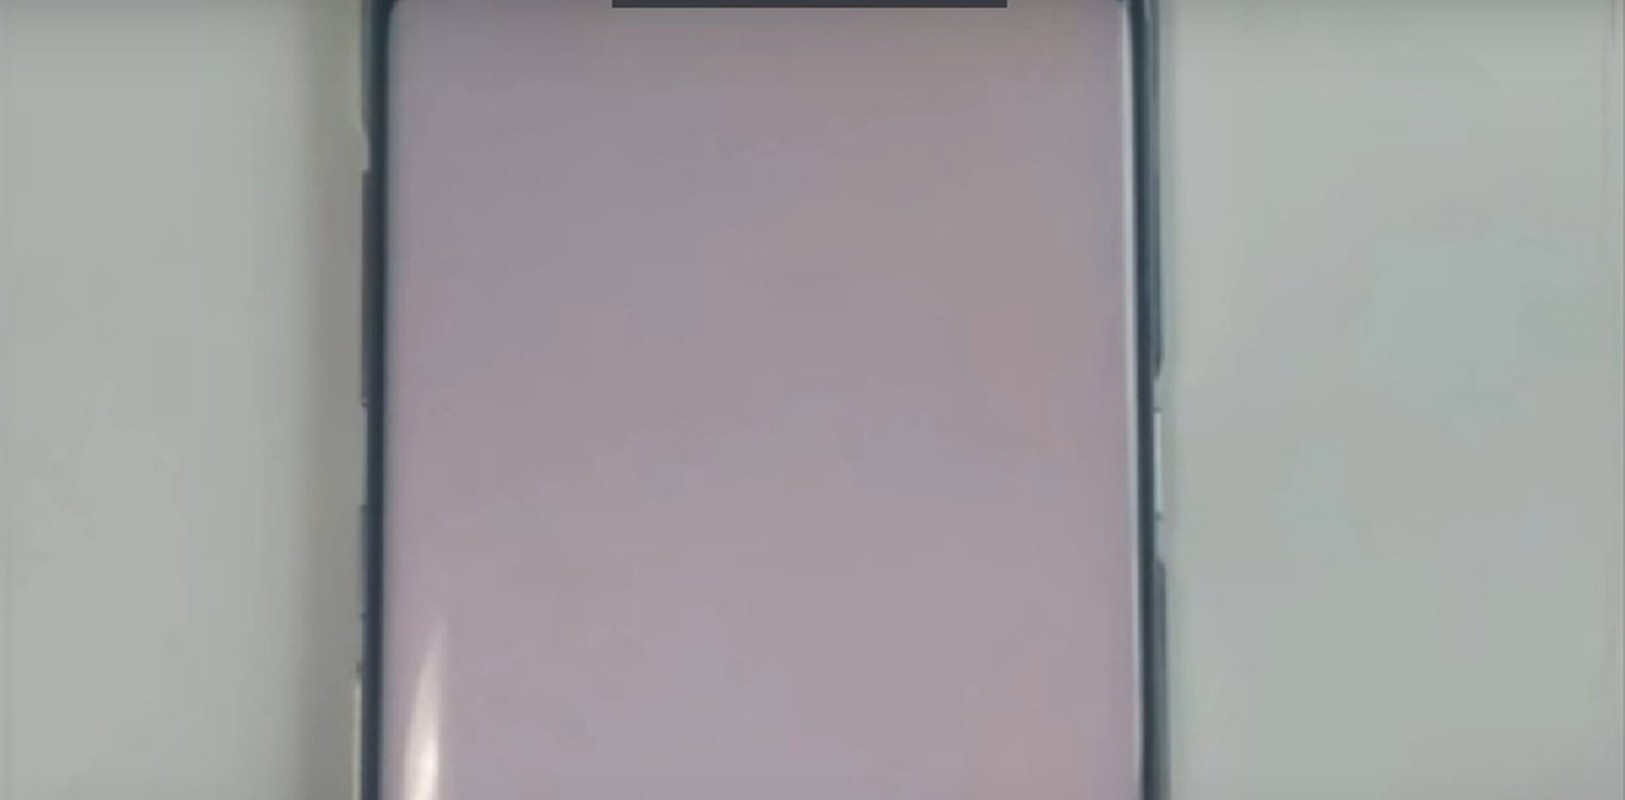 Man hinh bong do ruc, Samsung Galaxy S8 gap su co tram trong-Hinh-9